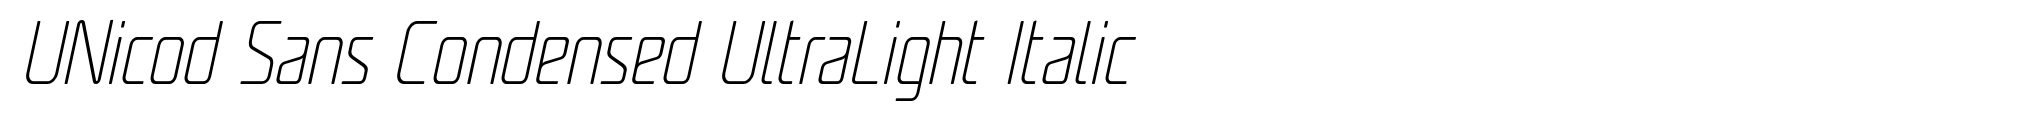 UNicod Sans Condensed UltraLight Italic image